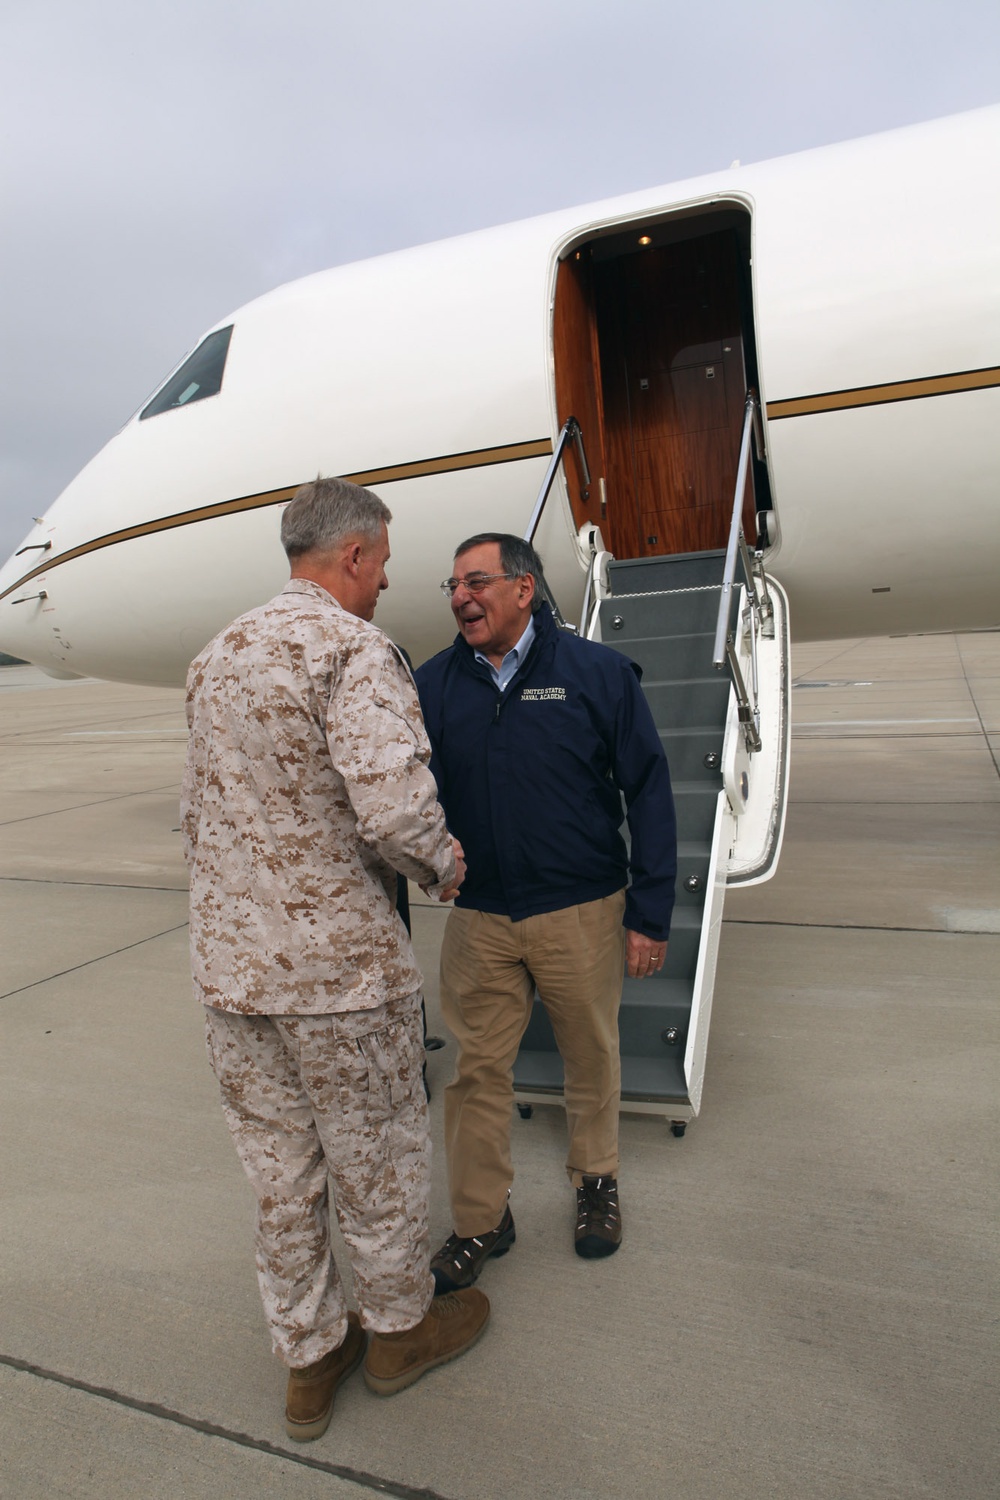 Secretary of Defense visits Camp Pendleton